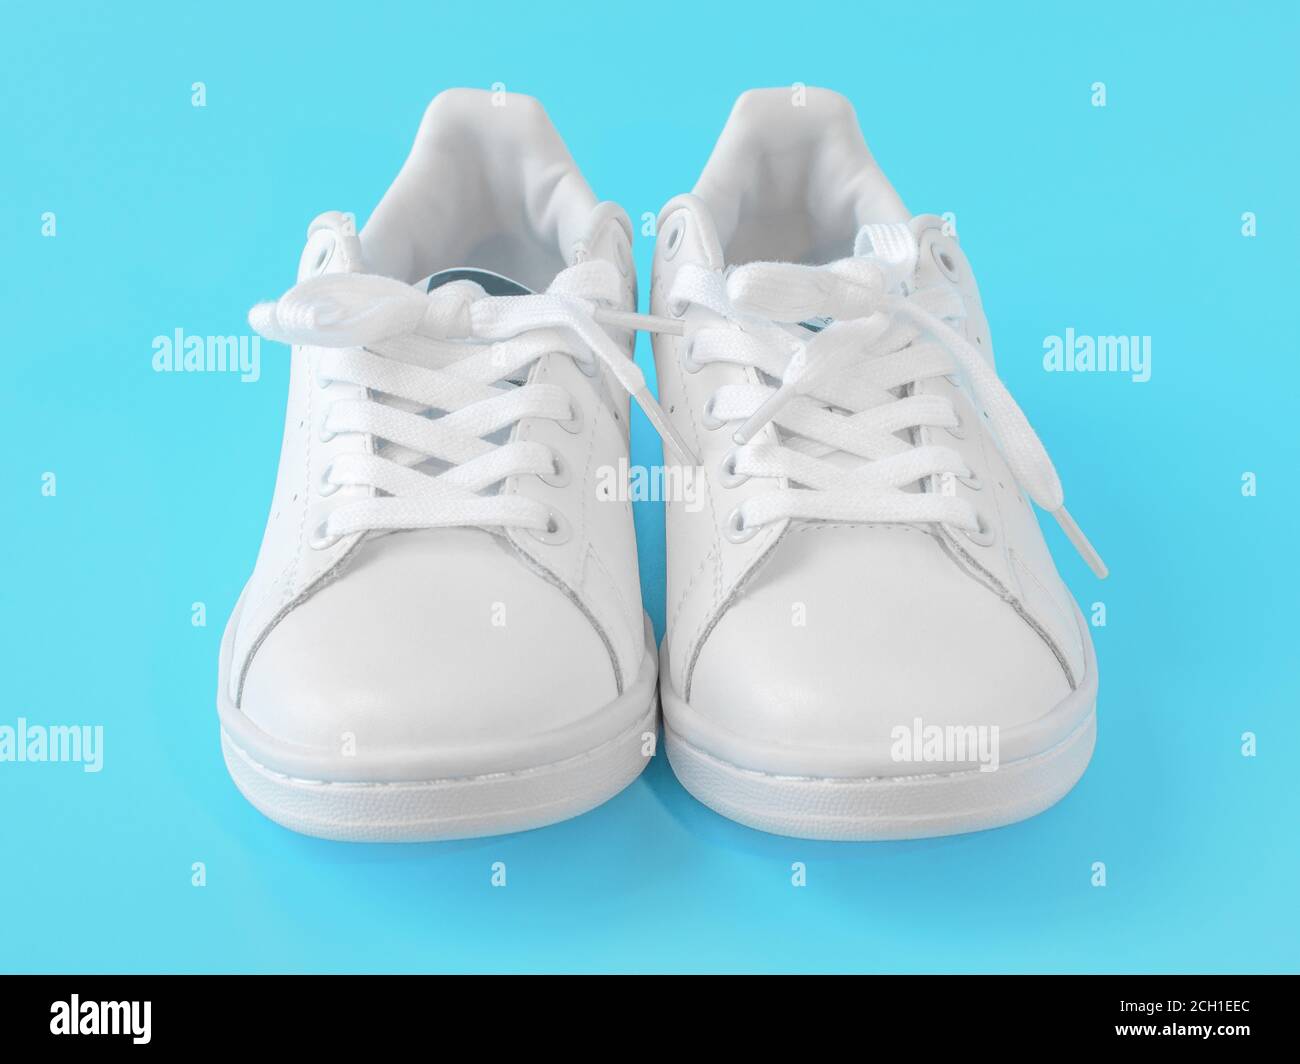 Paio di nuove sneaker bianche su sfondo blu. Nuove scarpe sportive in pelle bianca. Scarpe sportive per running, tennis, jogging. Sneaker bianche pulite Foto Stock